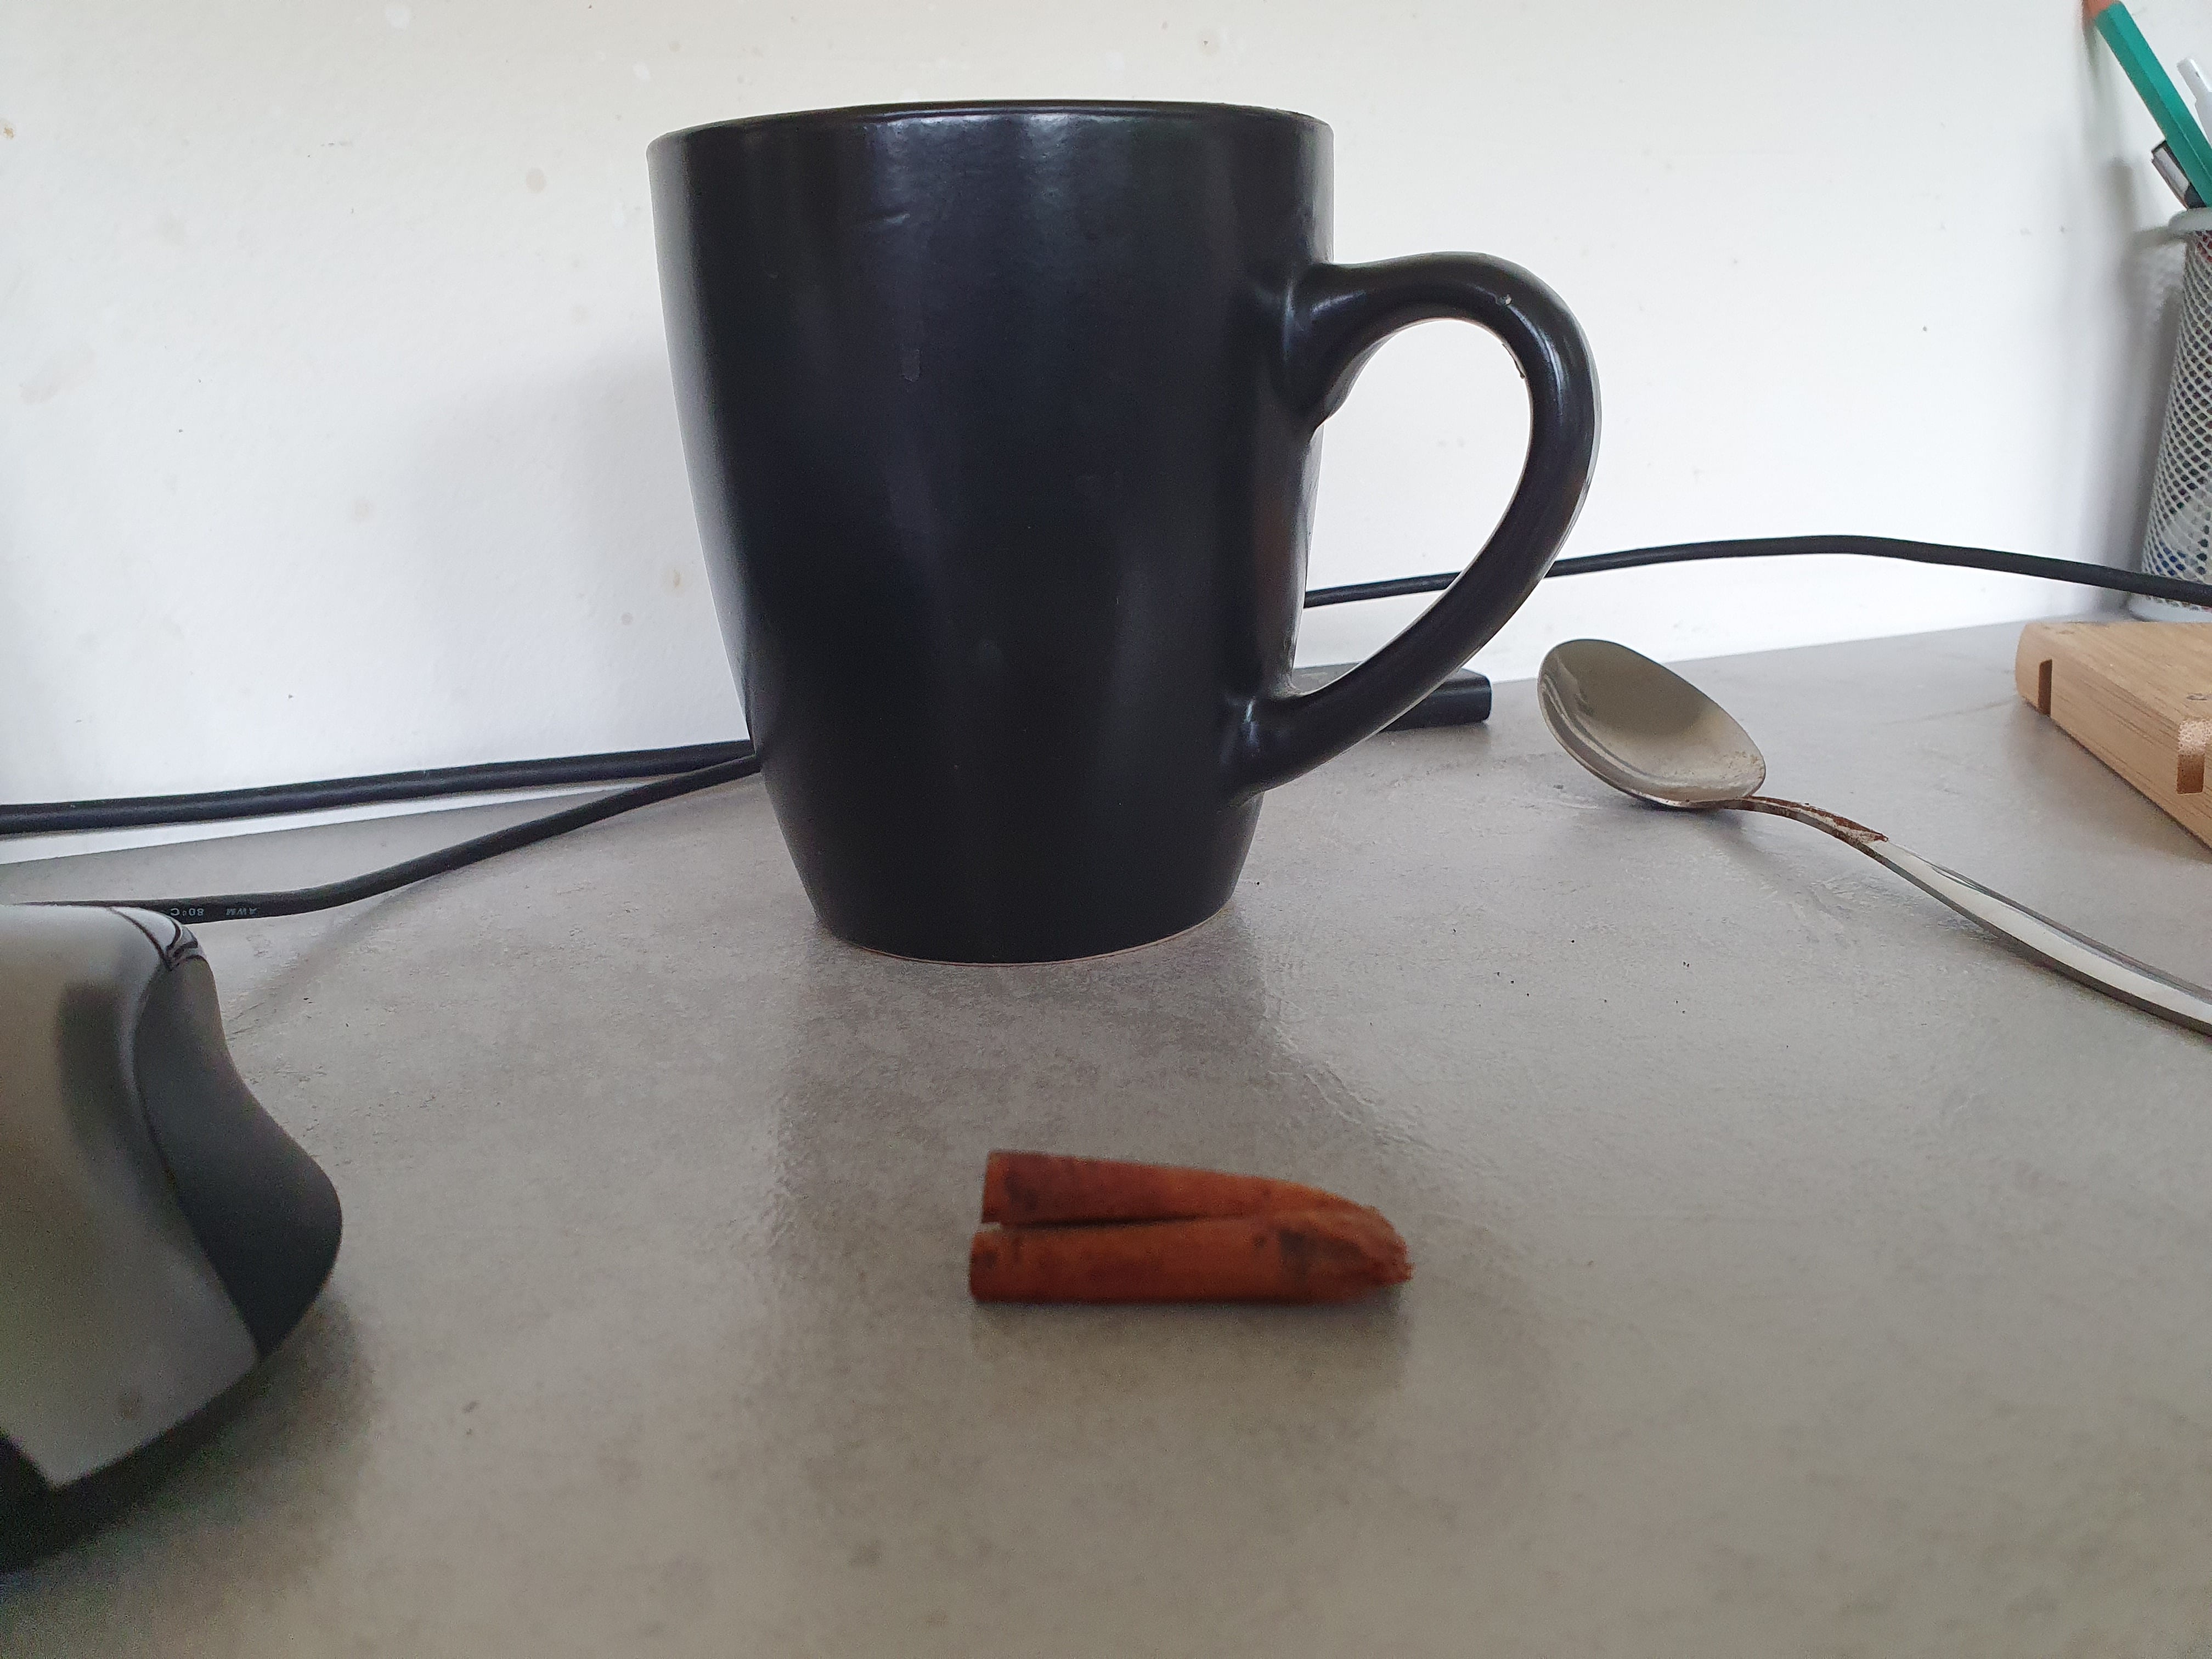 cinnamon stick and coffee cup